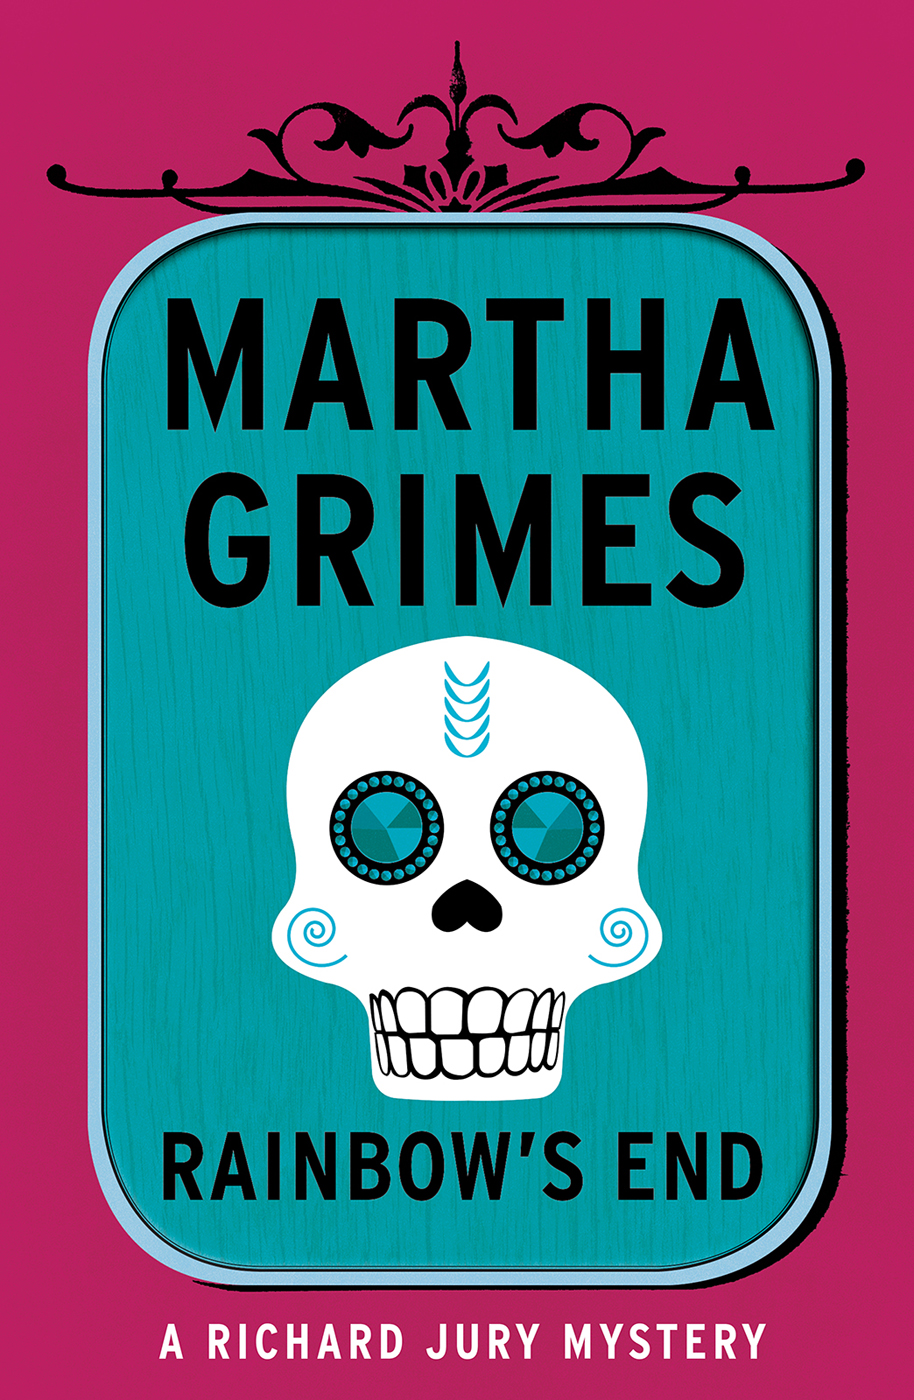 Rainbow's End by Martha Grimes